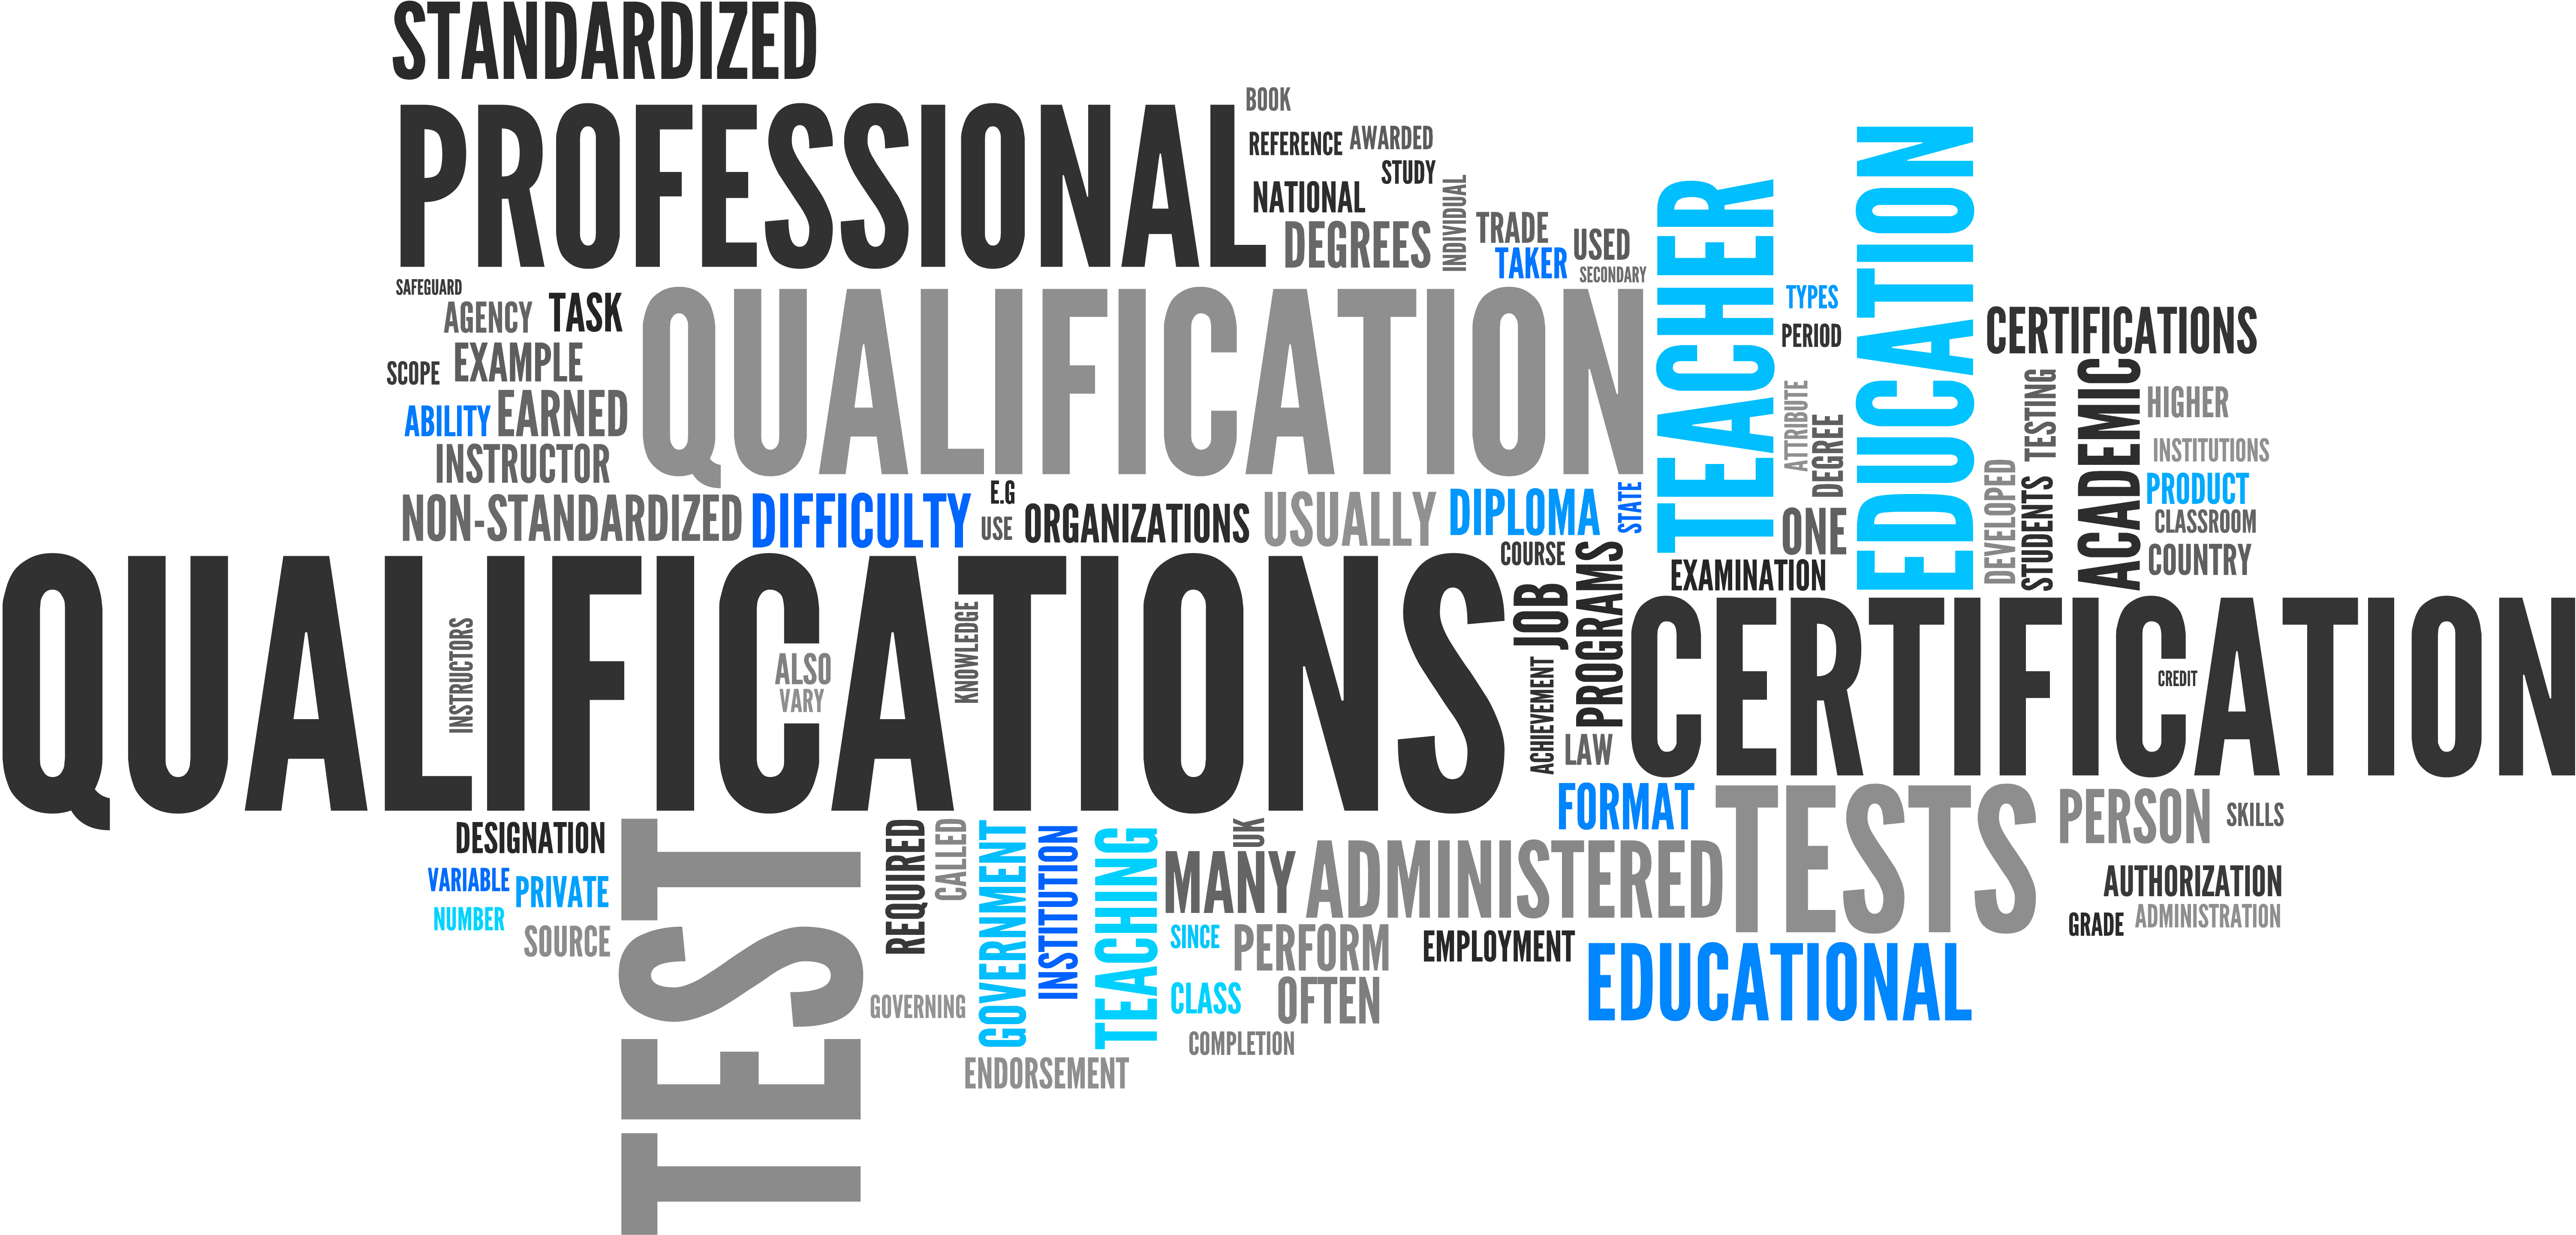 BOHS Courses Qualifications 